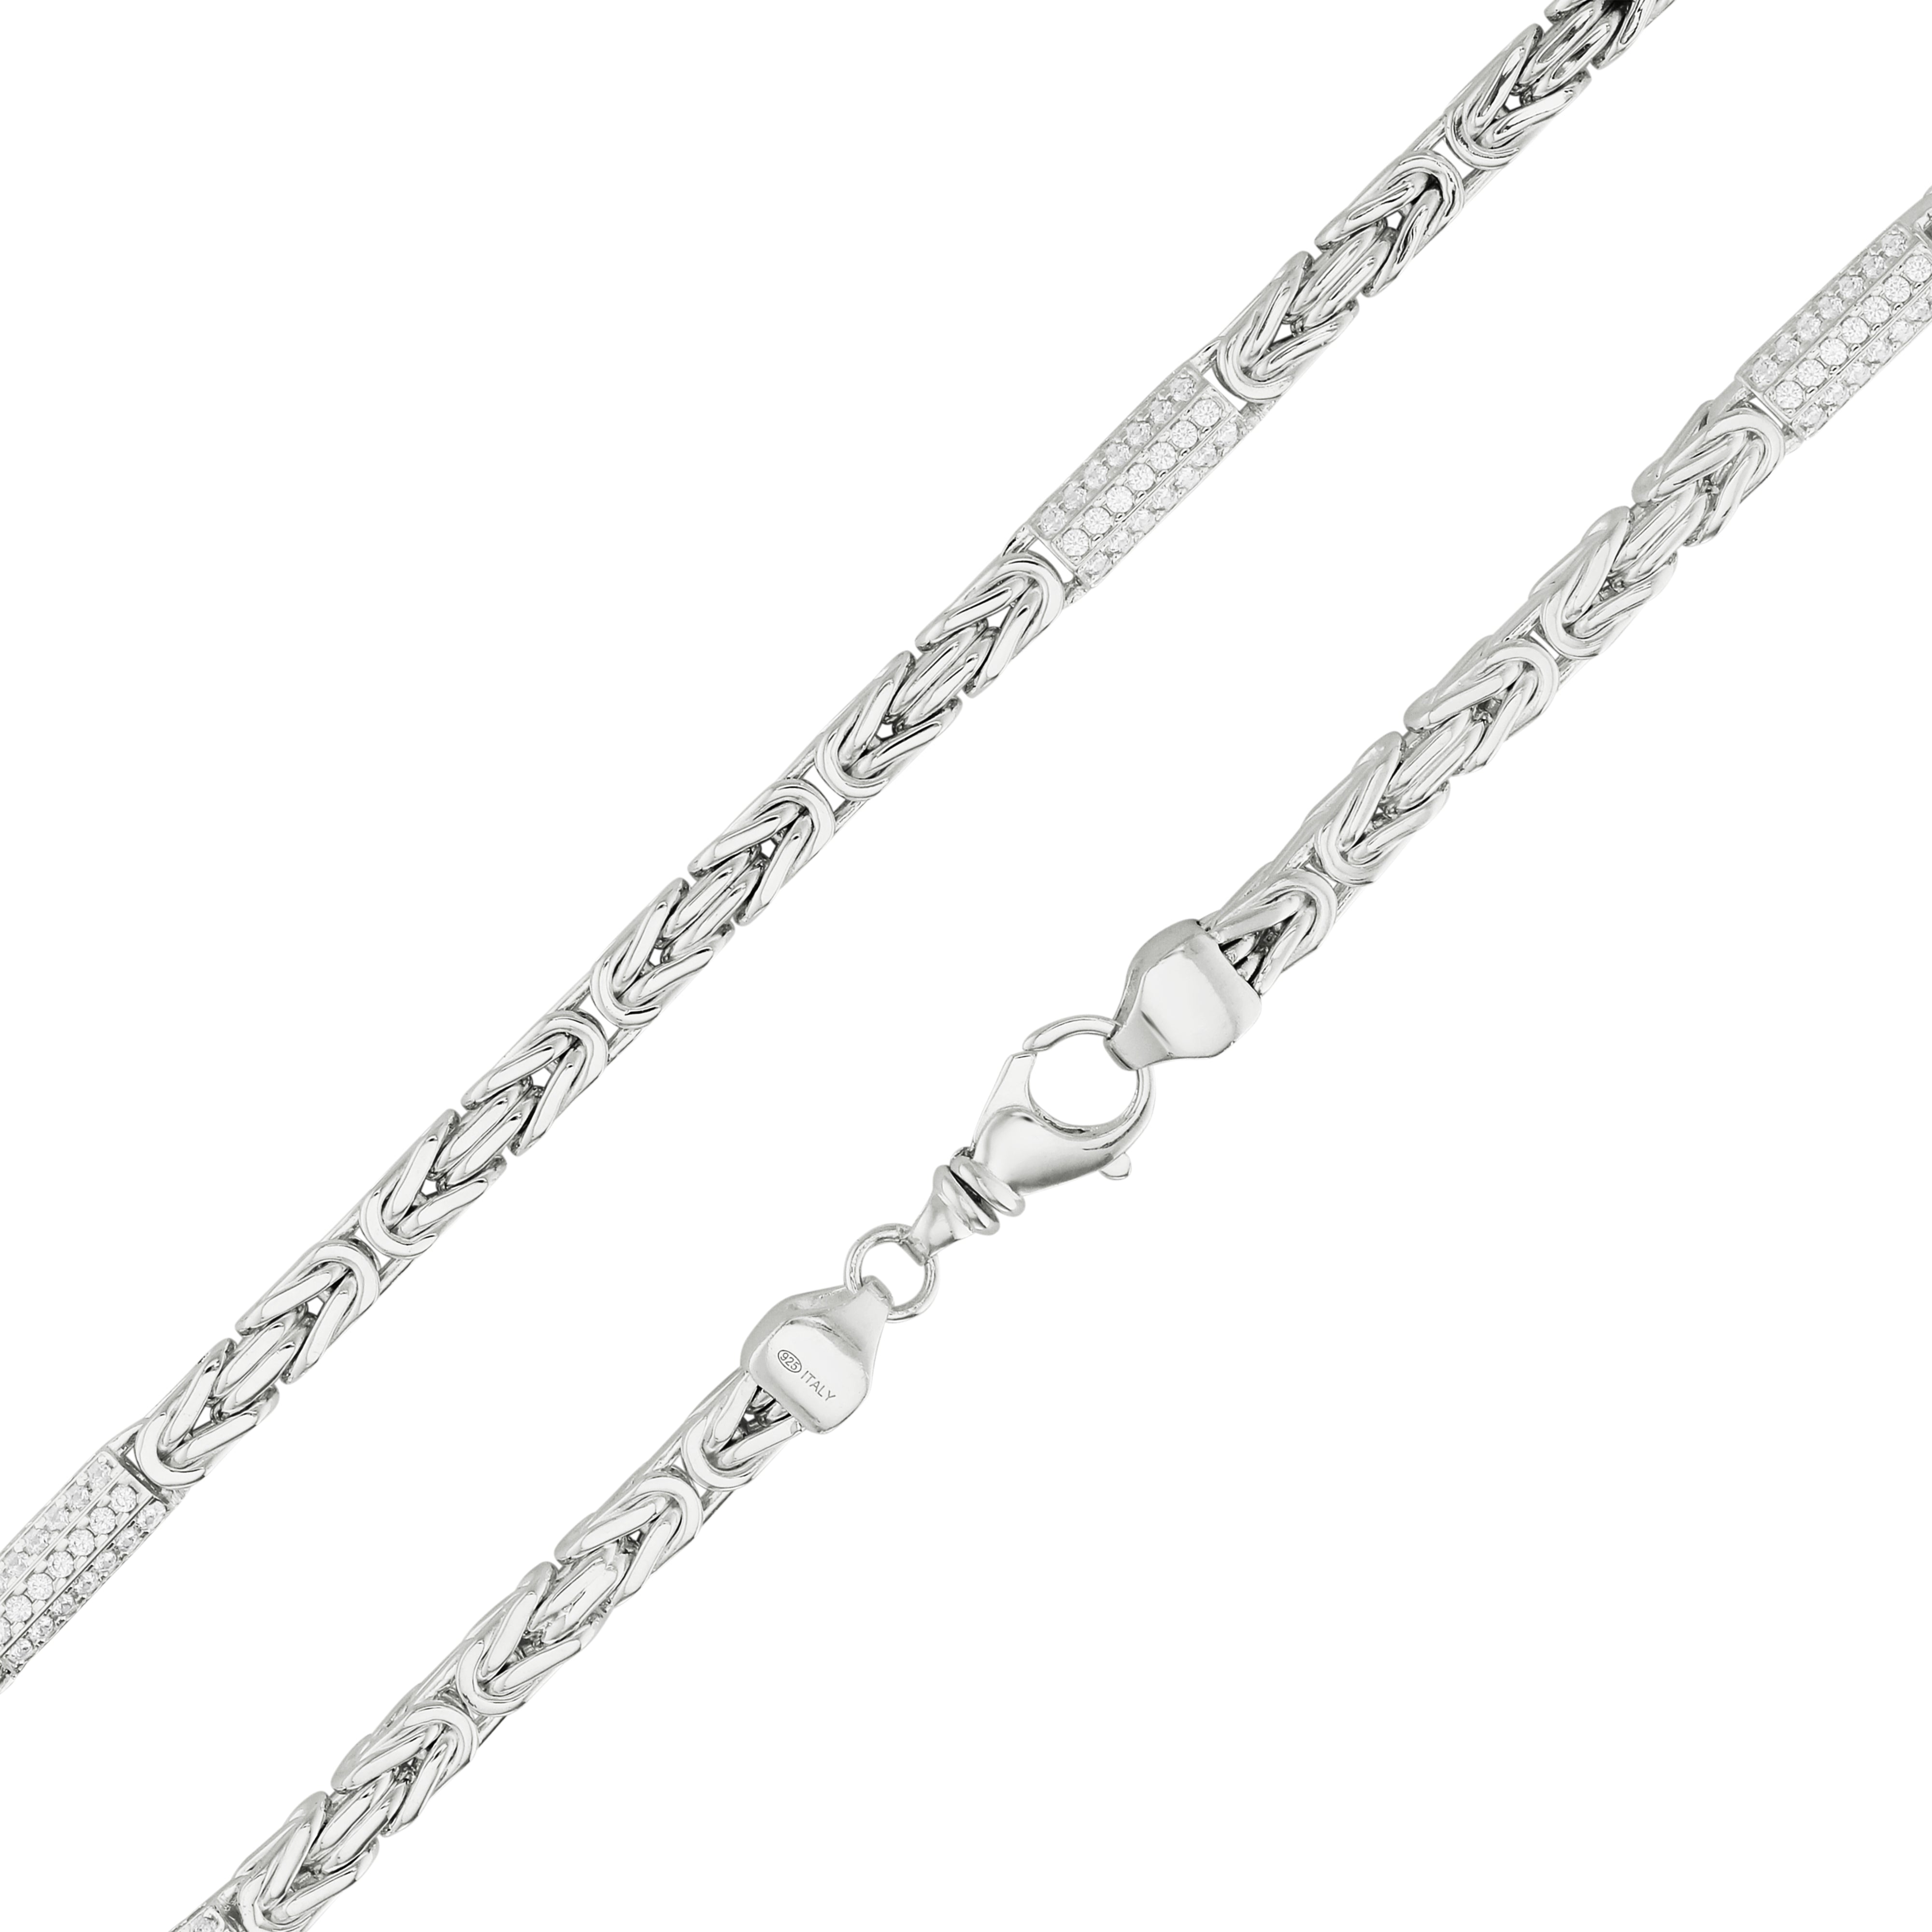 Byzantine chain 4mm wide - 925 silver